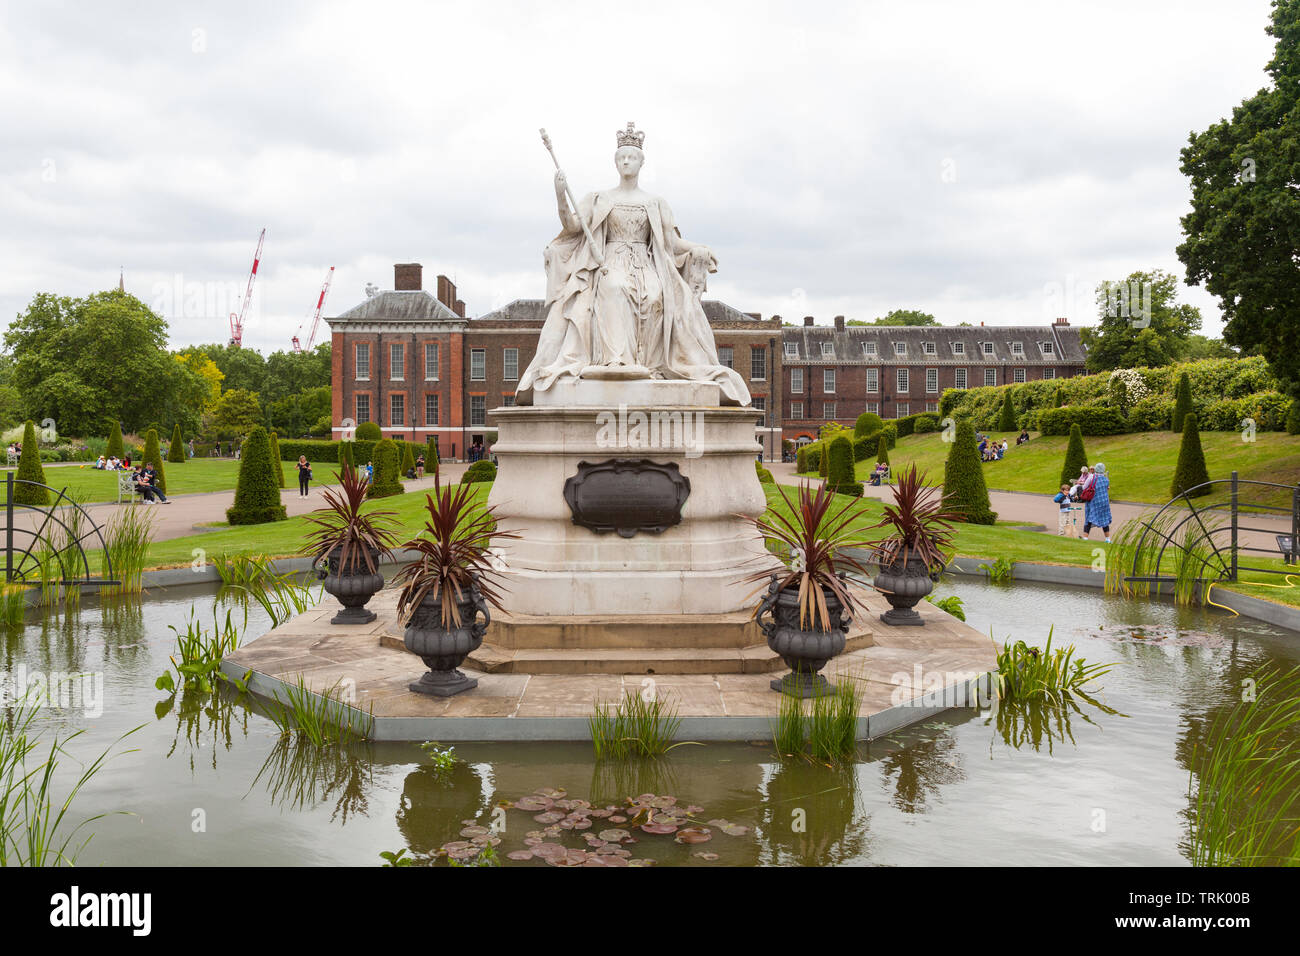 Kensington Palace and Queen Victoria statue, Kensington Gardens, London, England, United Kingdom. Stock Photo